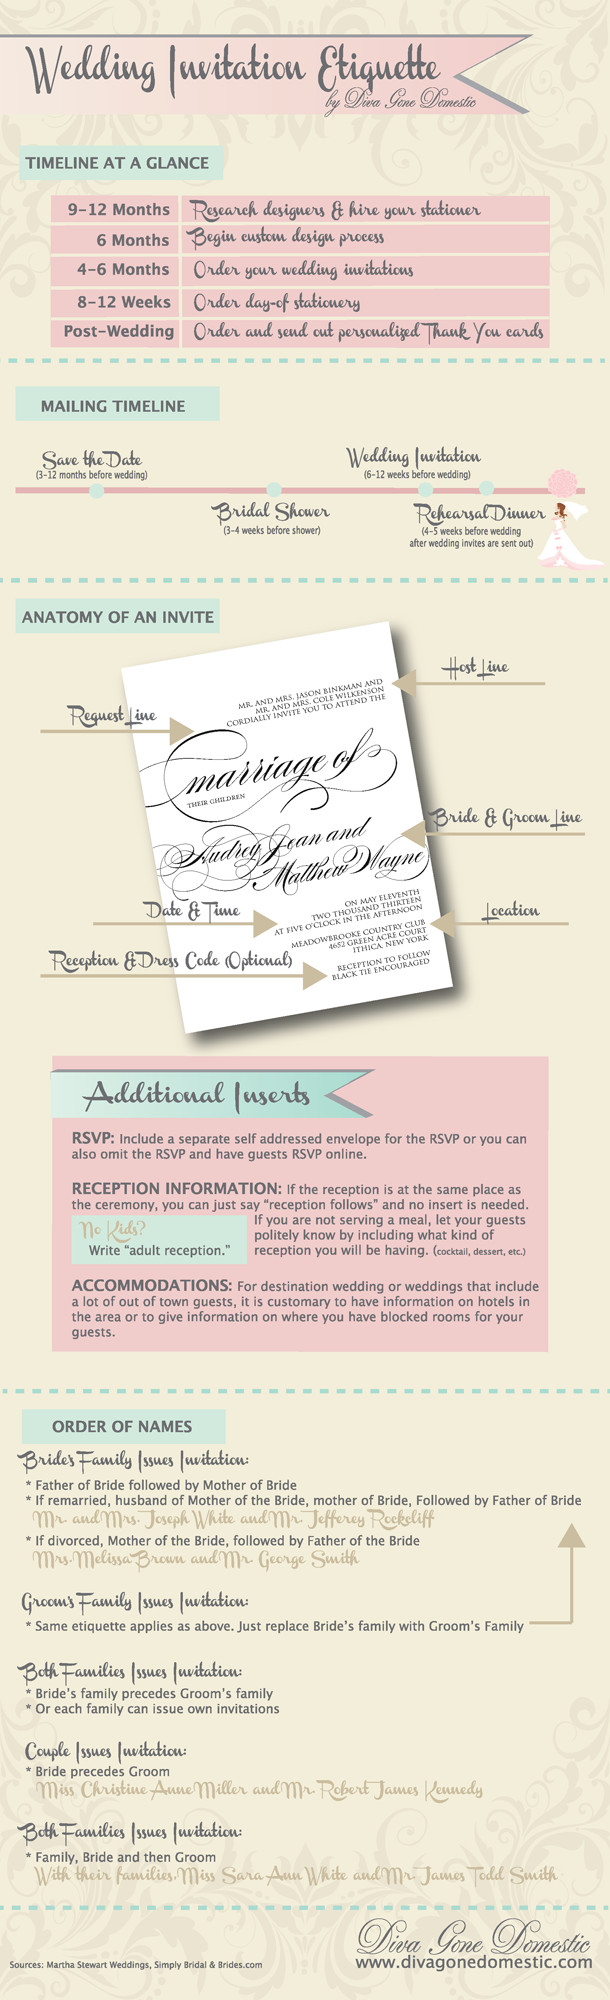 Wedding Invite Etiquette
 25 Informal Wedding Invitation Wording Ideas